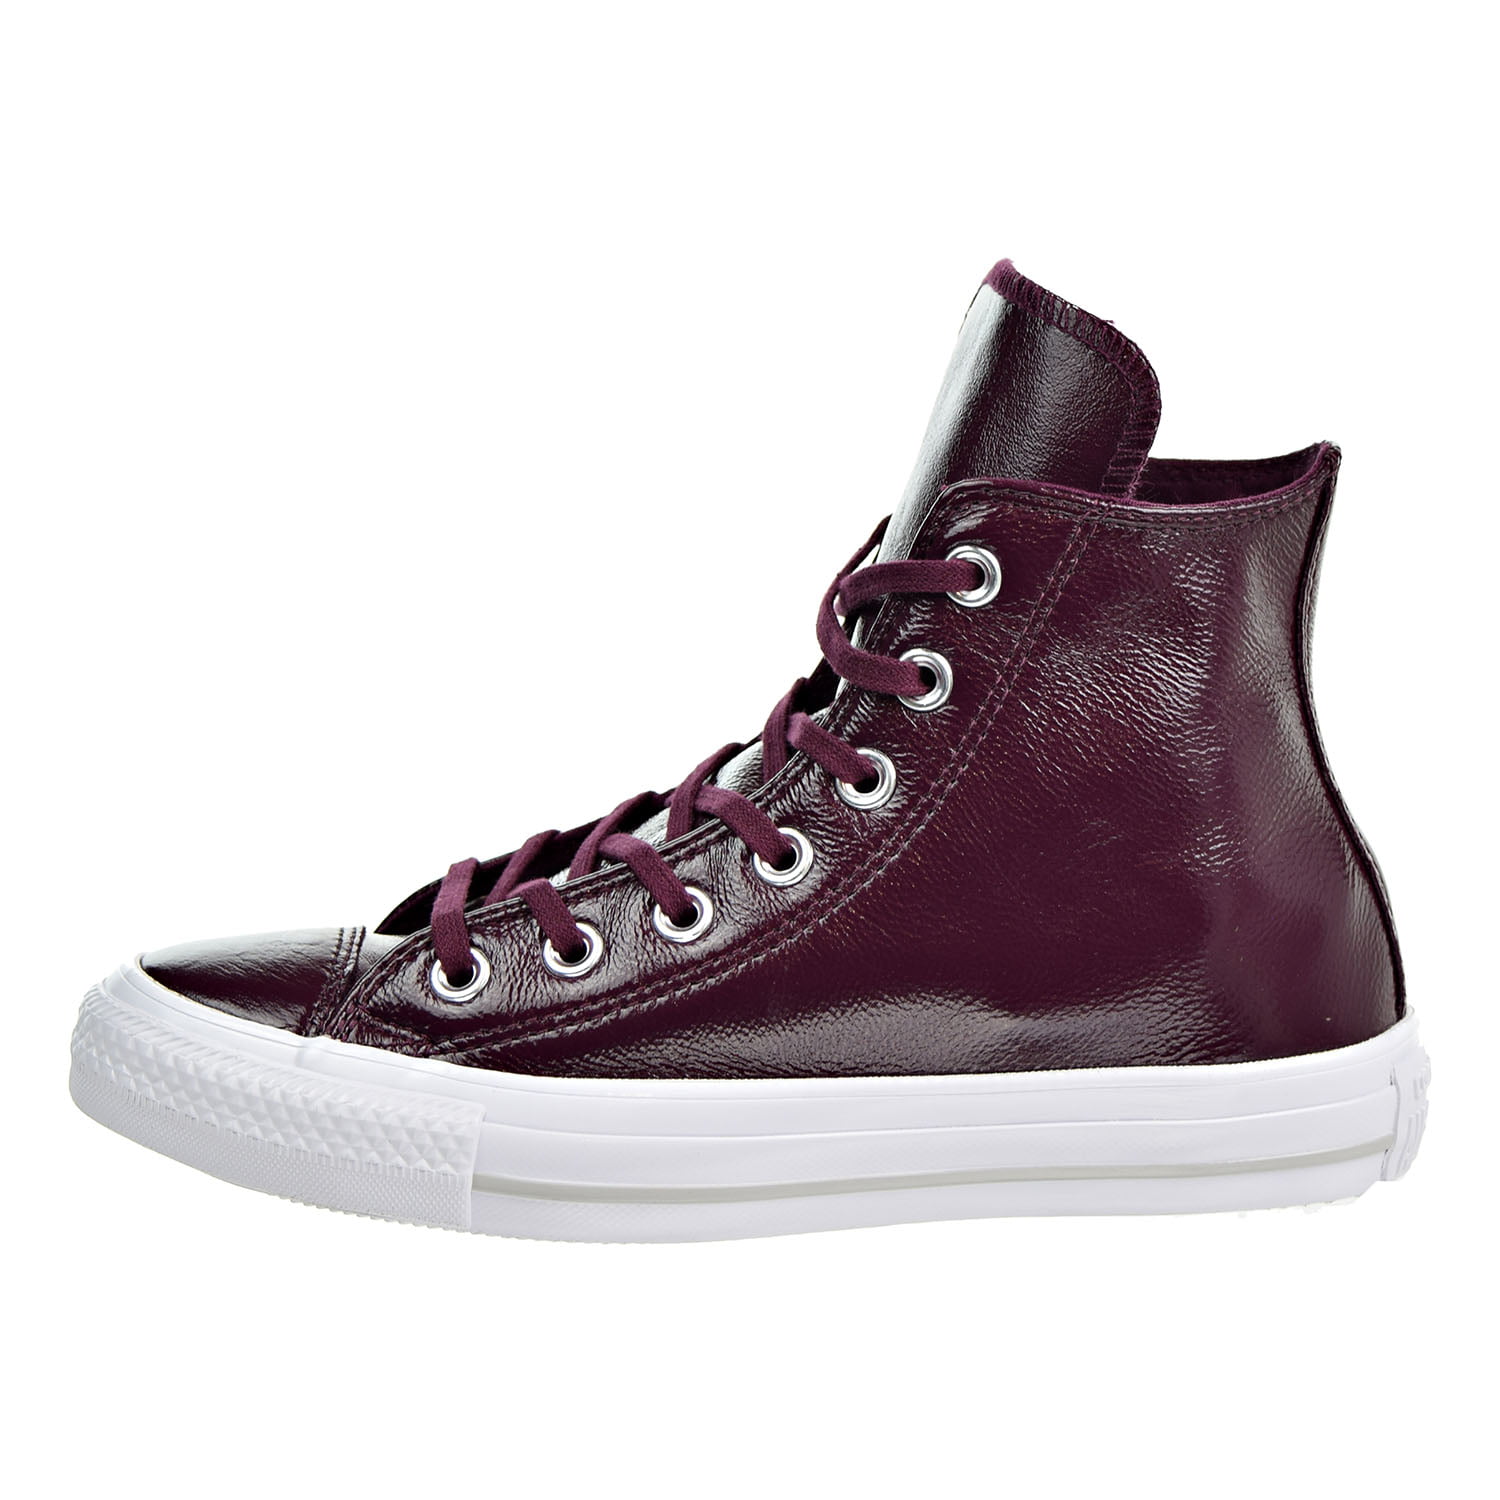 Converse Chuck Taylor All Star High Top Women's Shoes Dark Sangria - Walmart.com